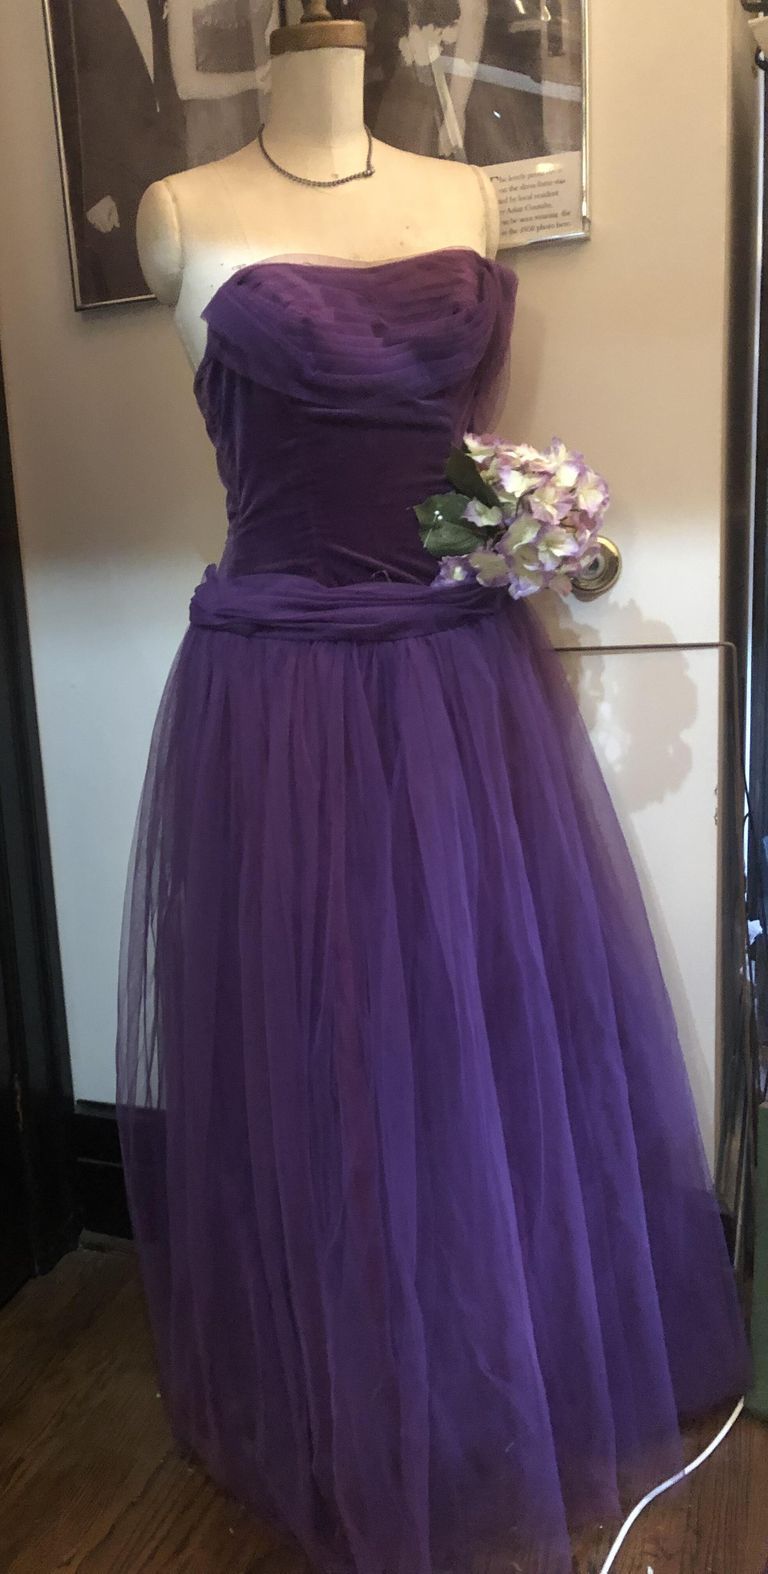          Dress: Purple Prom Dress, c. 1956 picture number 1
   